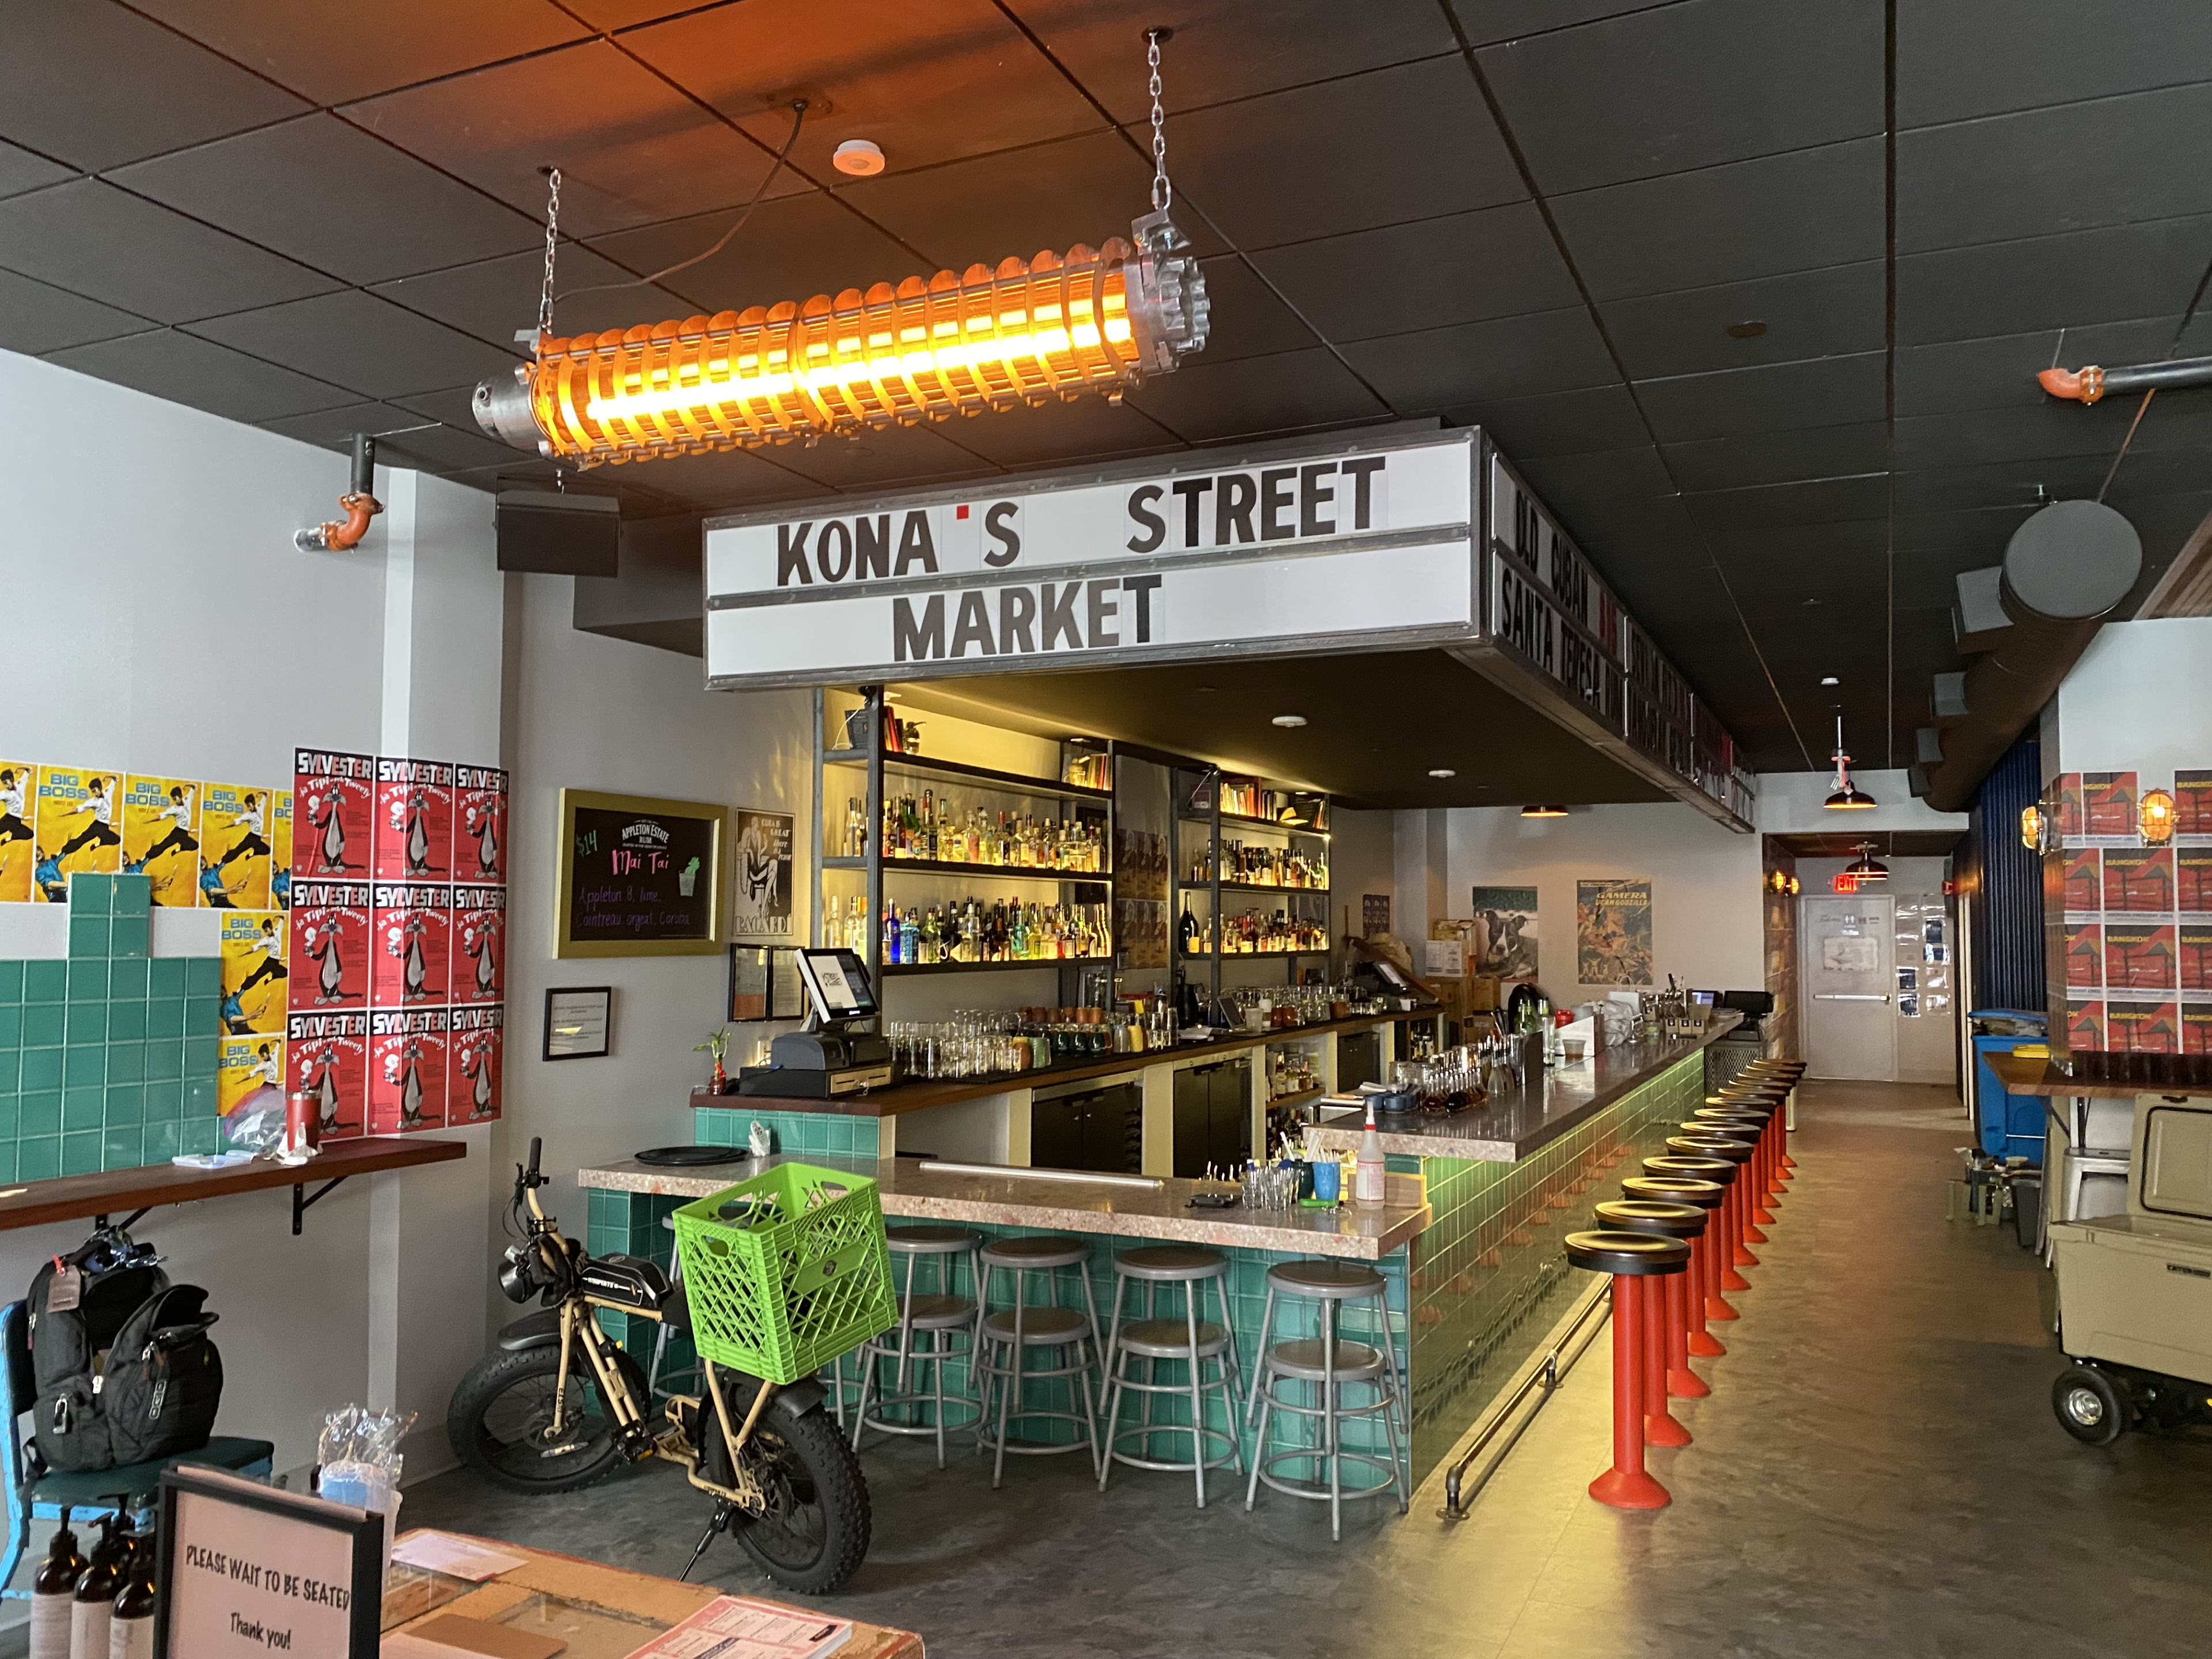 Kona's Street Market image